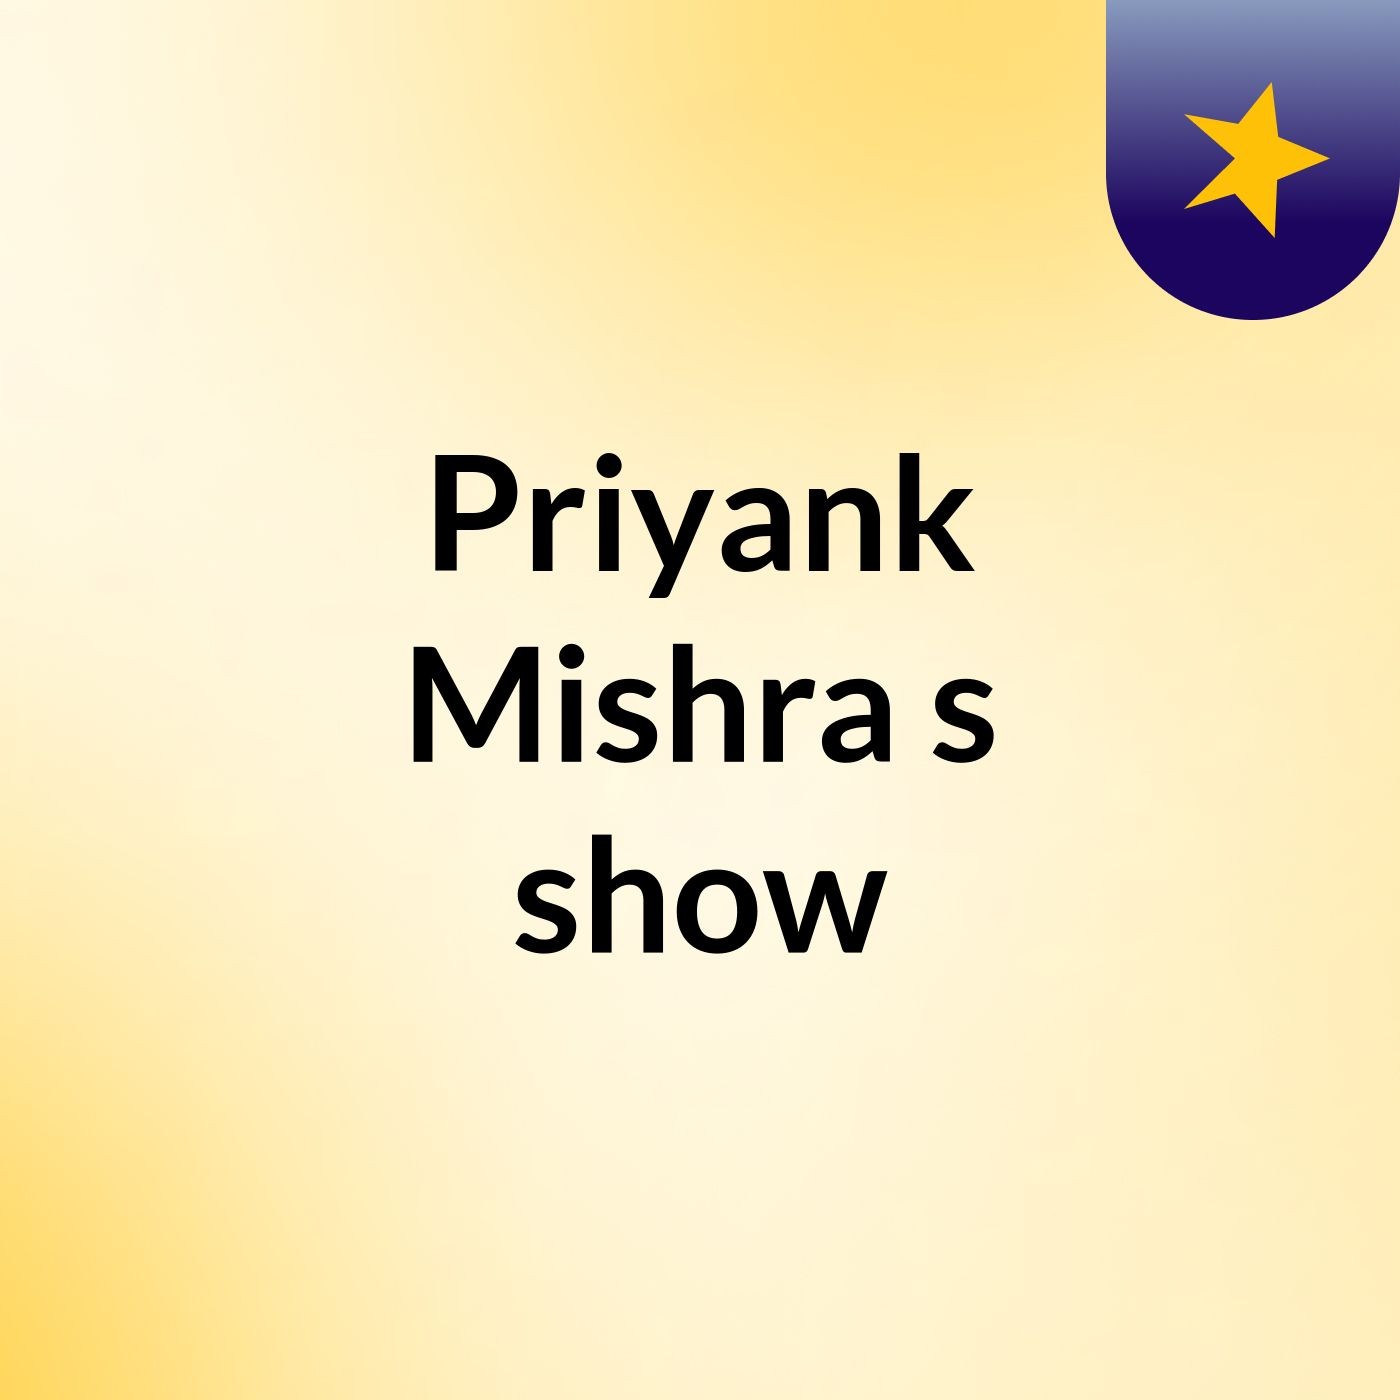 Priyank Mishra's show